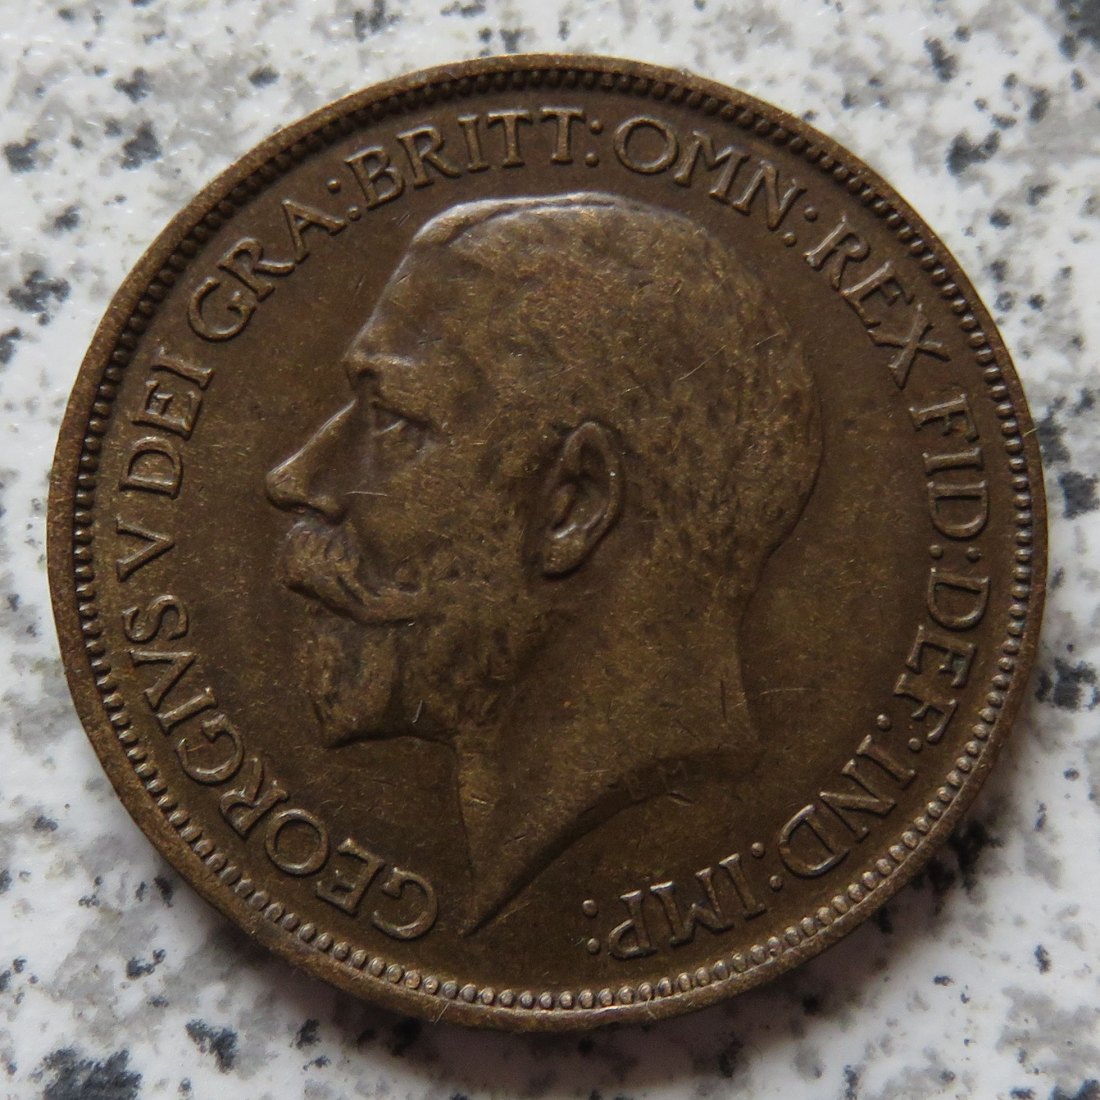  Großbritannien half Penny 1917   